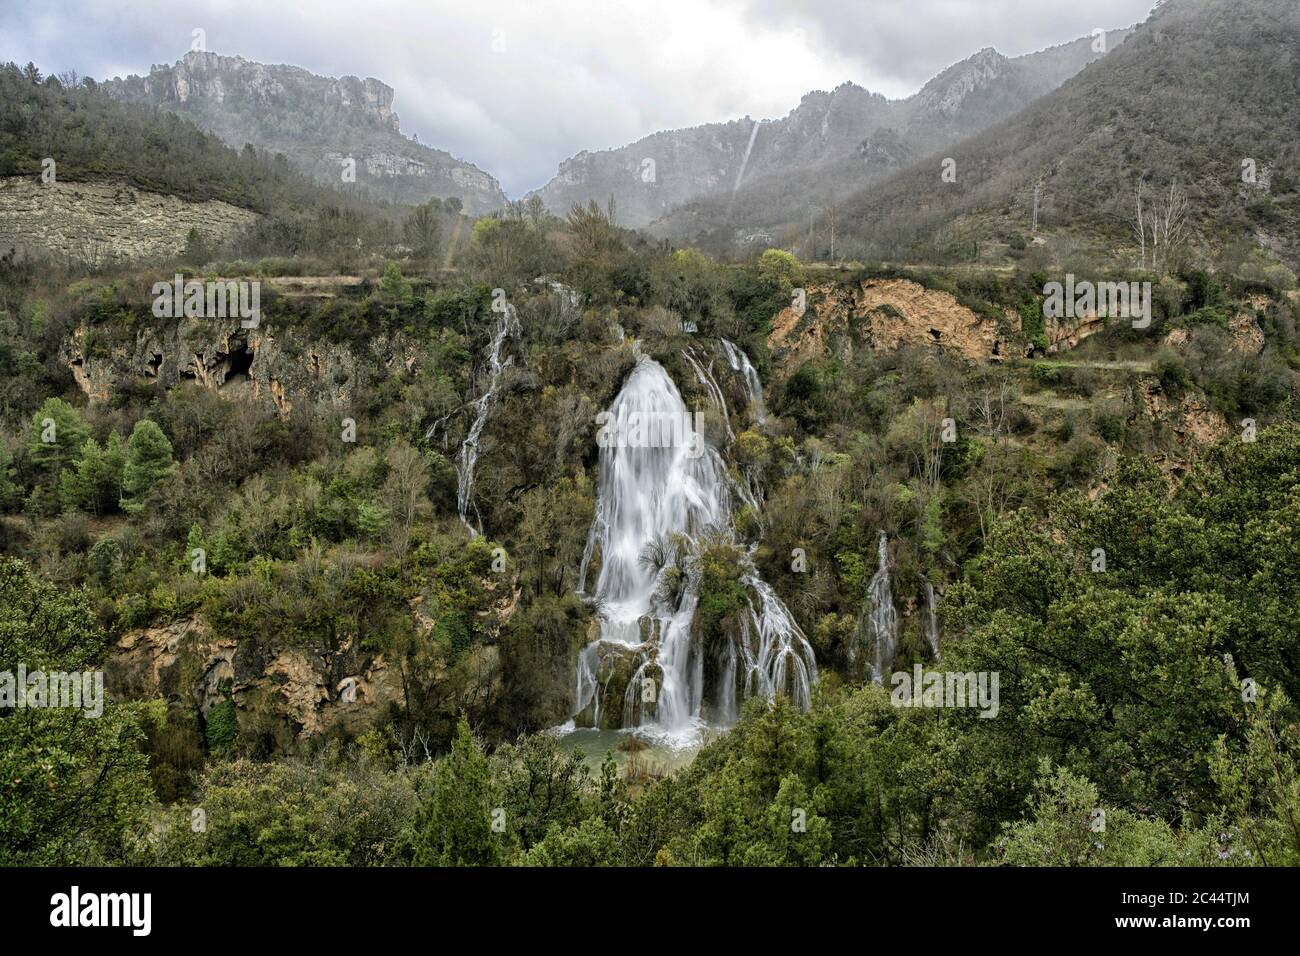 Spain, Province of Guadalajara, Waterfall in Alto Tajo Nature Reserve Stock Photo